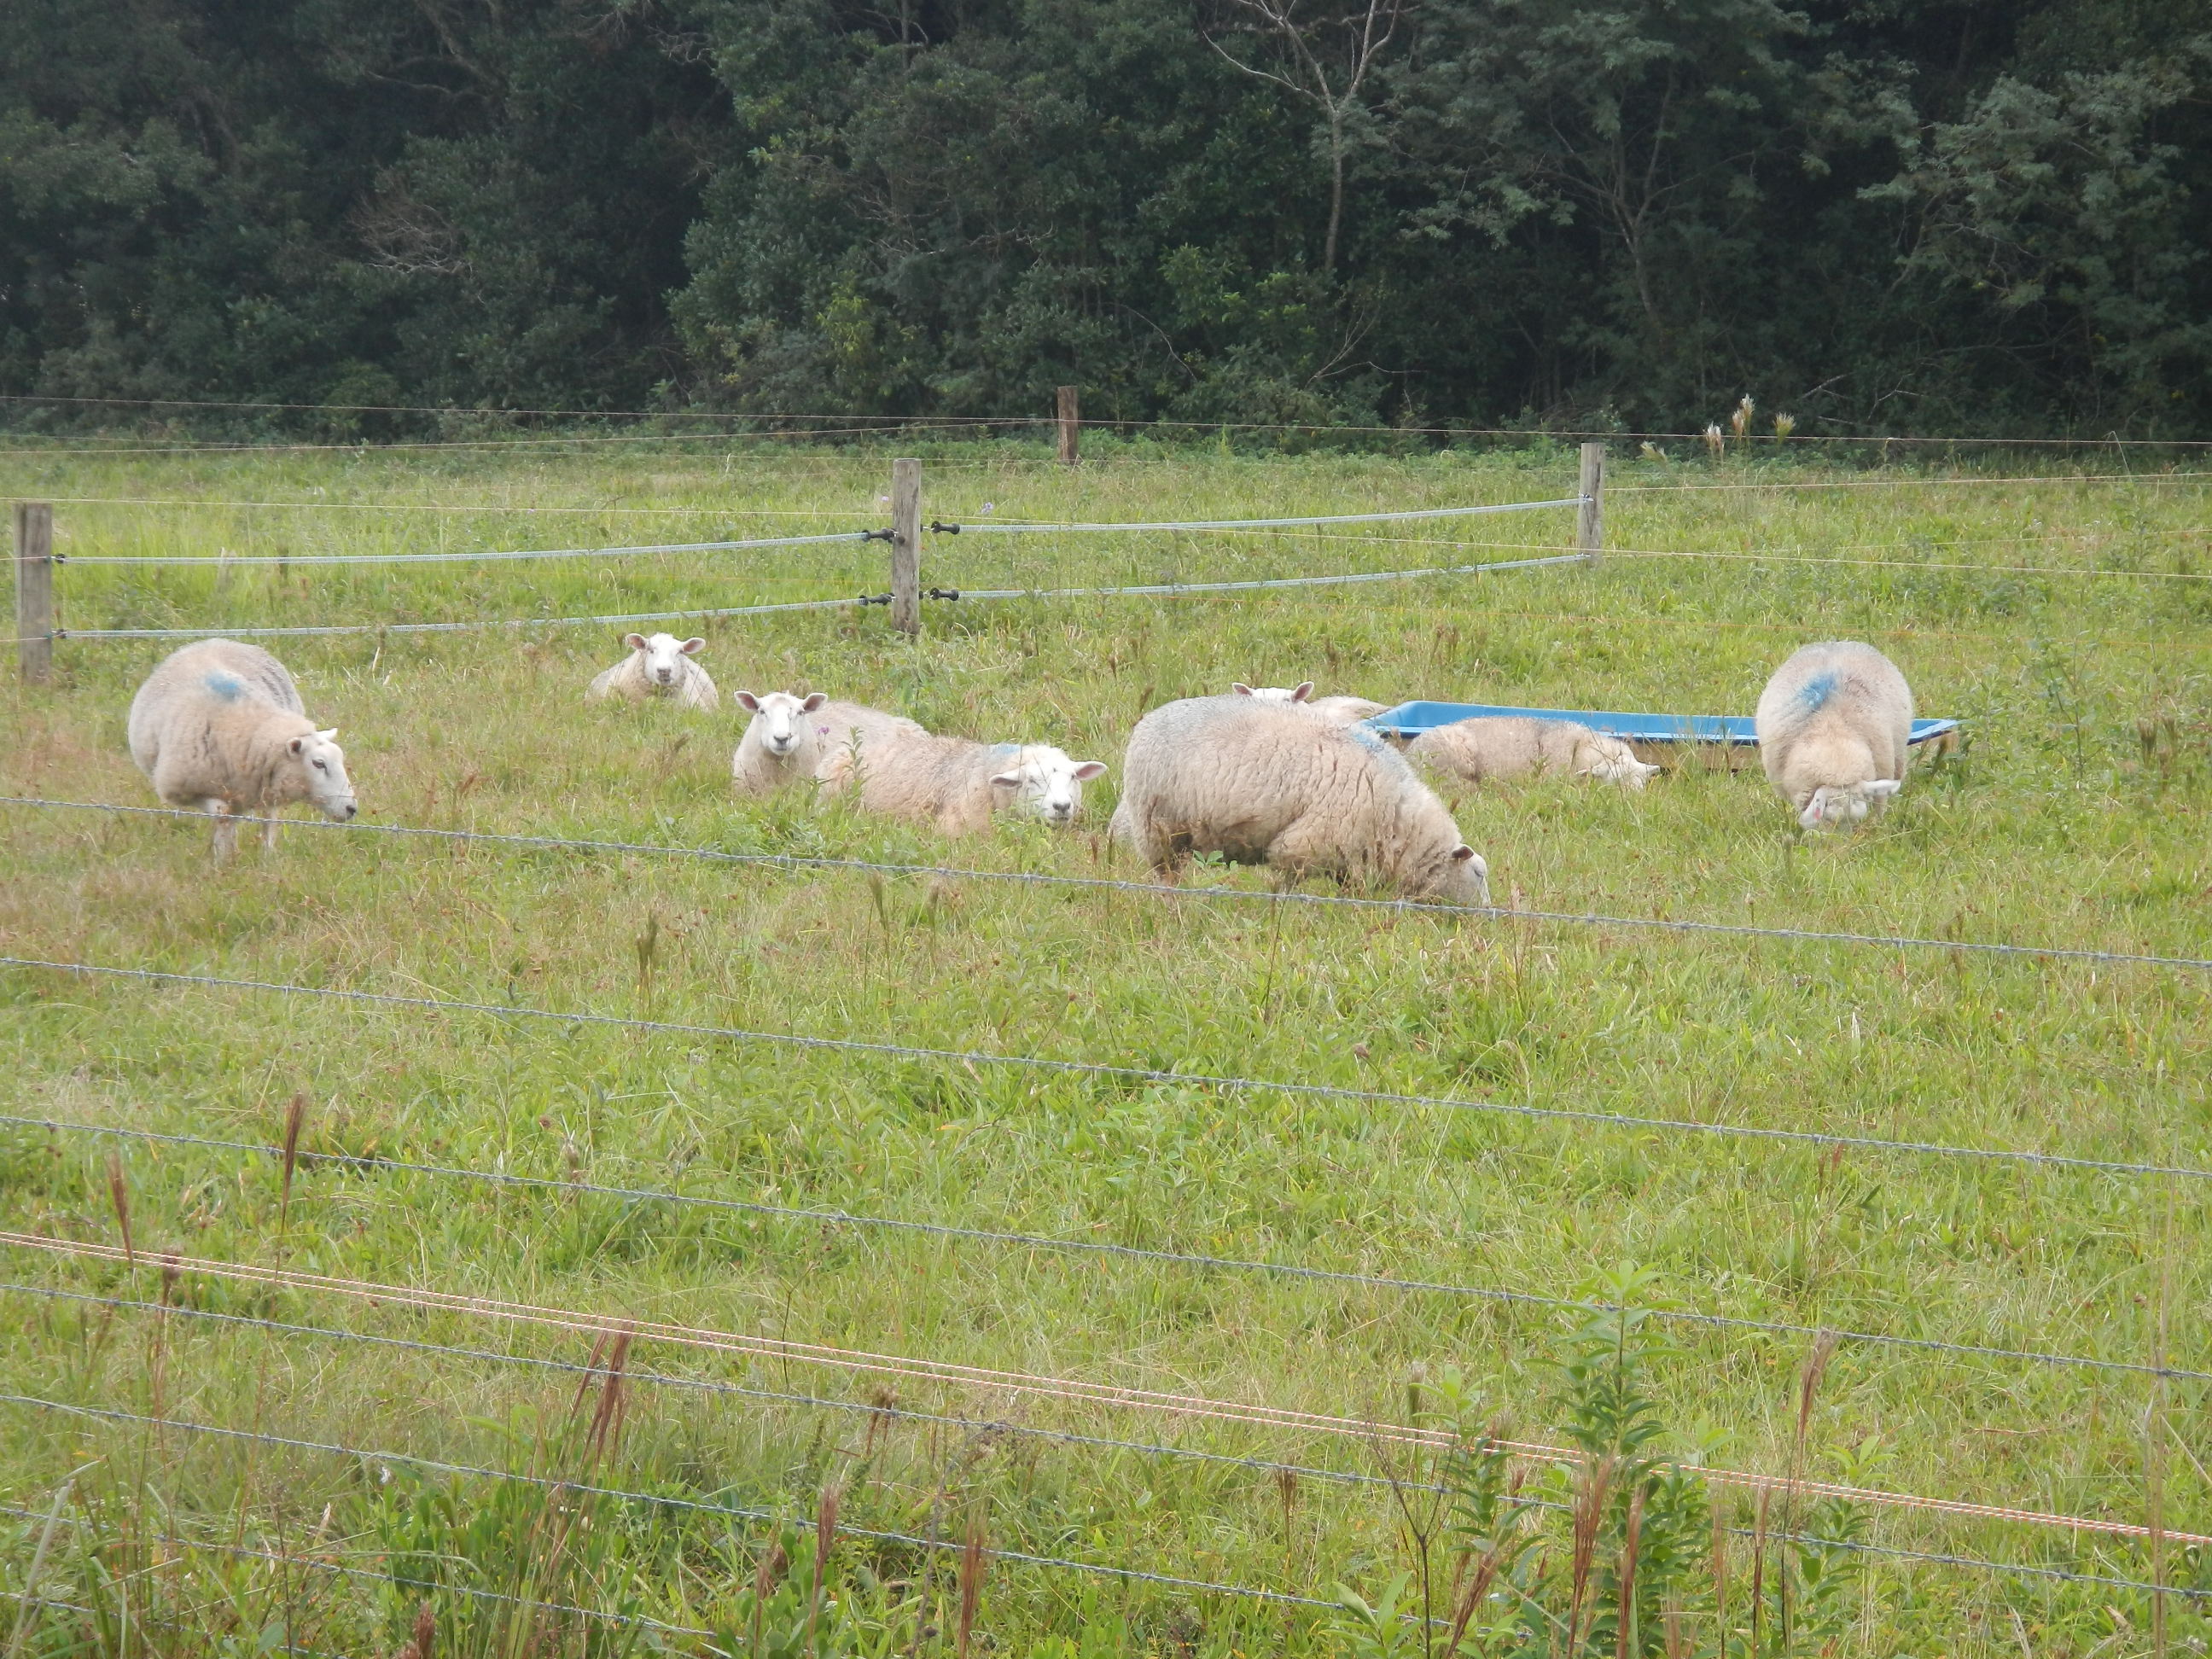 20140613 Fazenda Ovinocultura ovelhas zootecnia 004.jpg